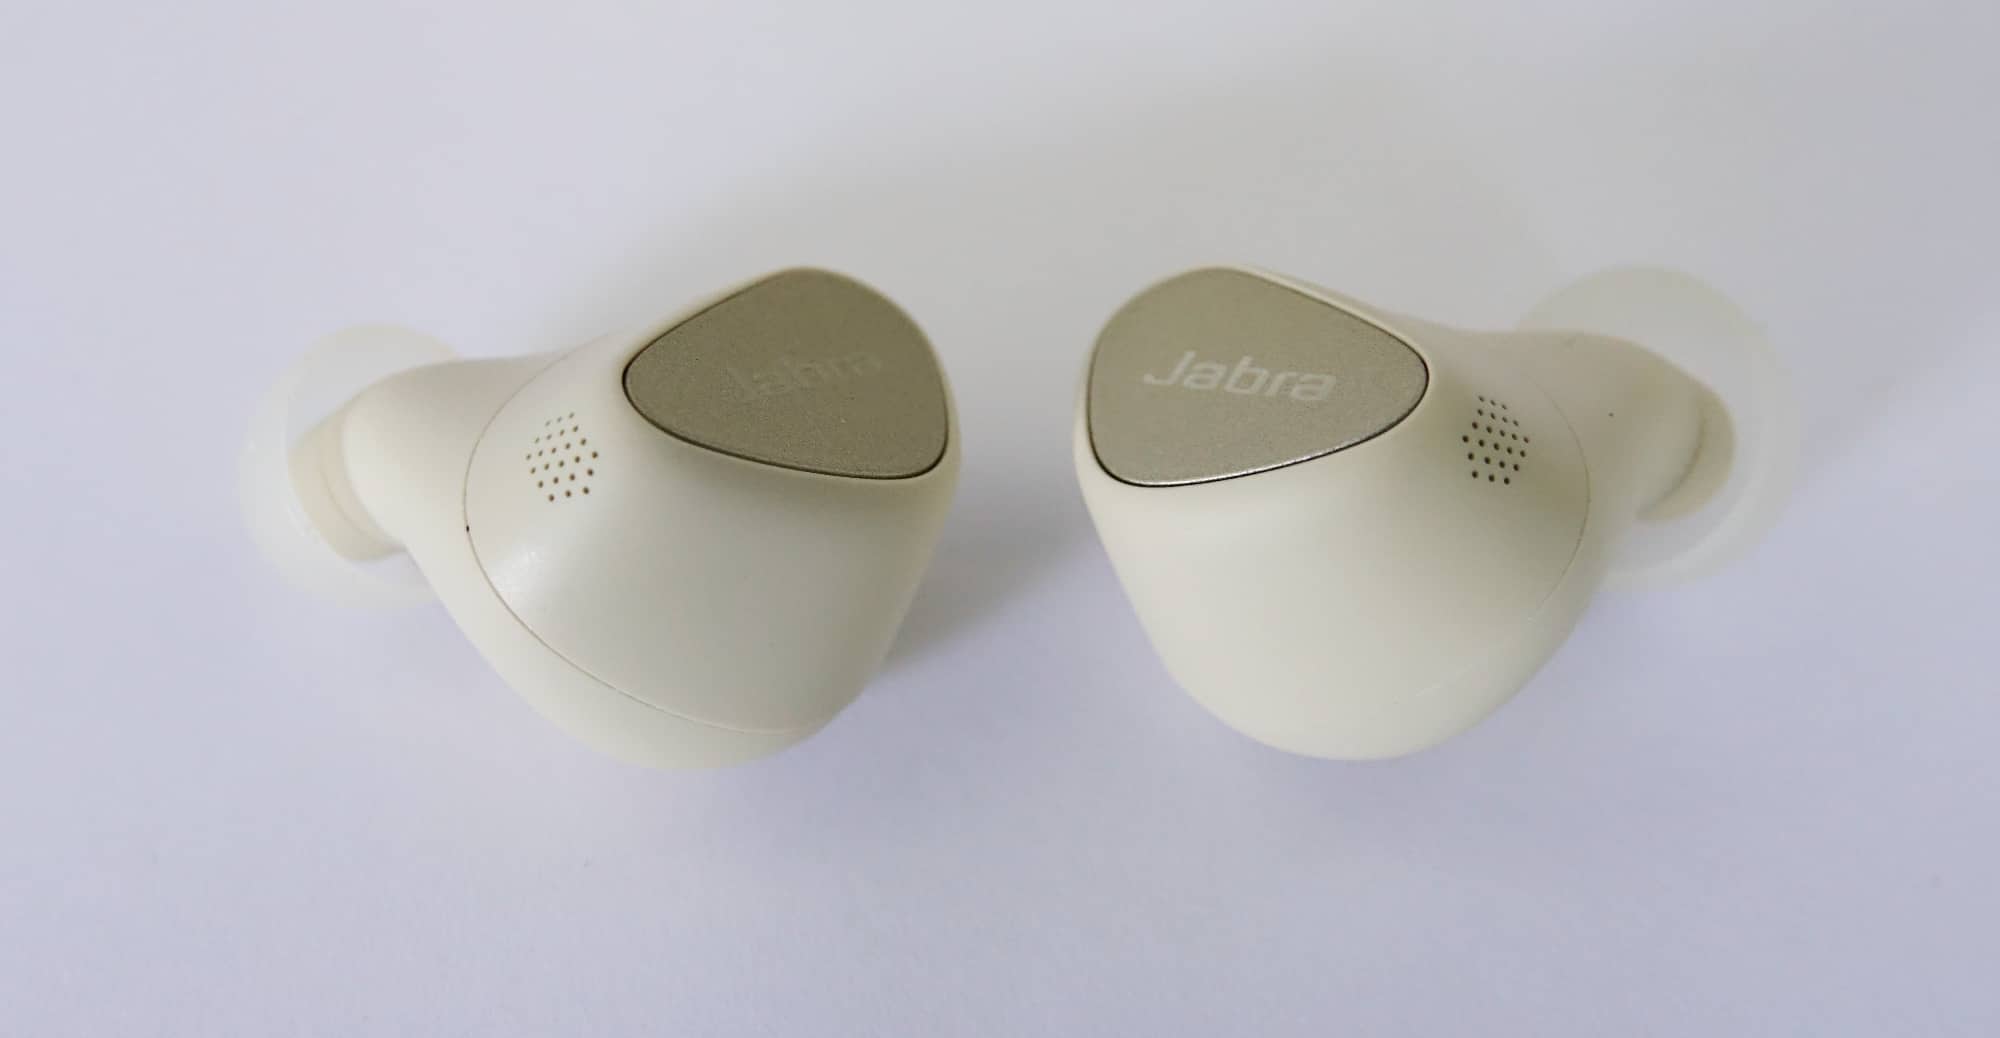 Jabra Elite 5 review: nearly flawless wireless earbuds